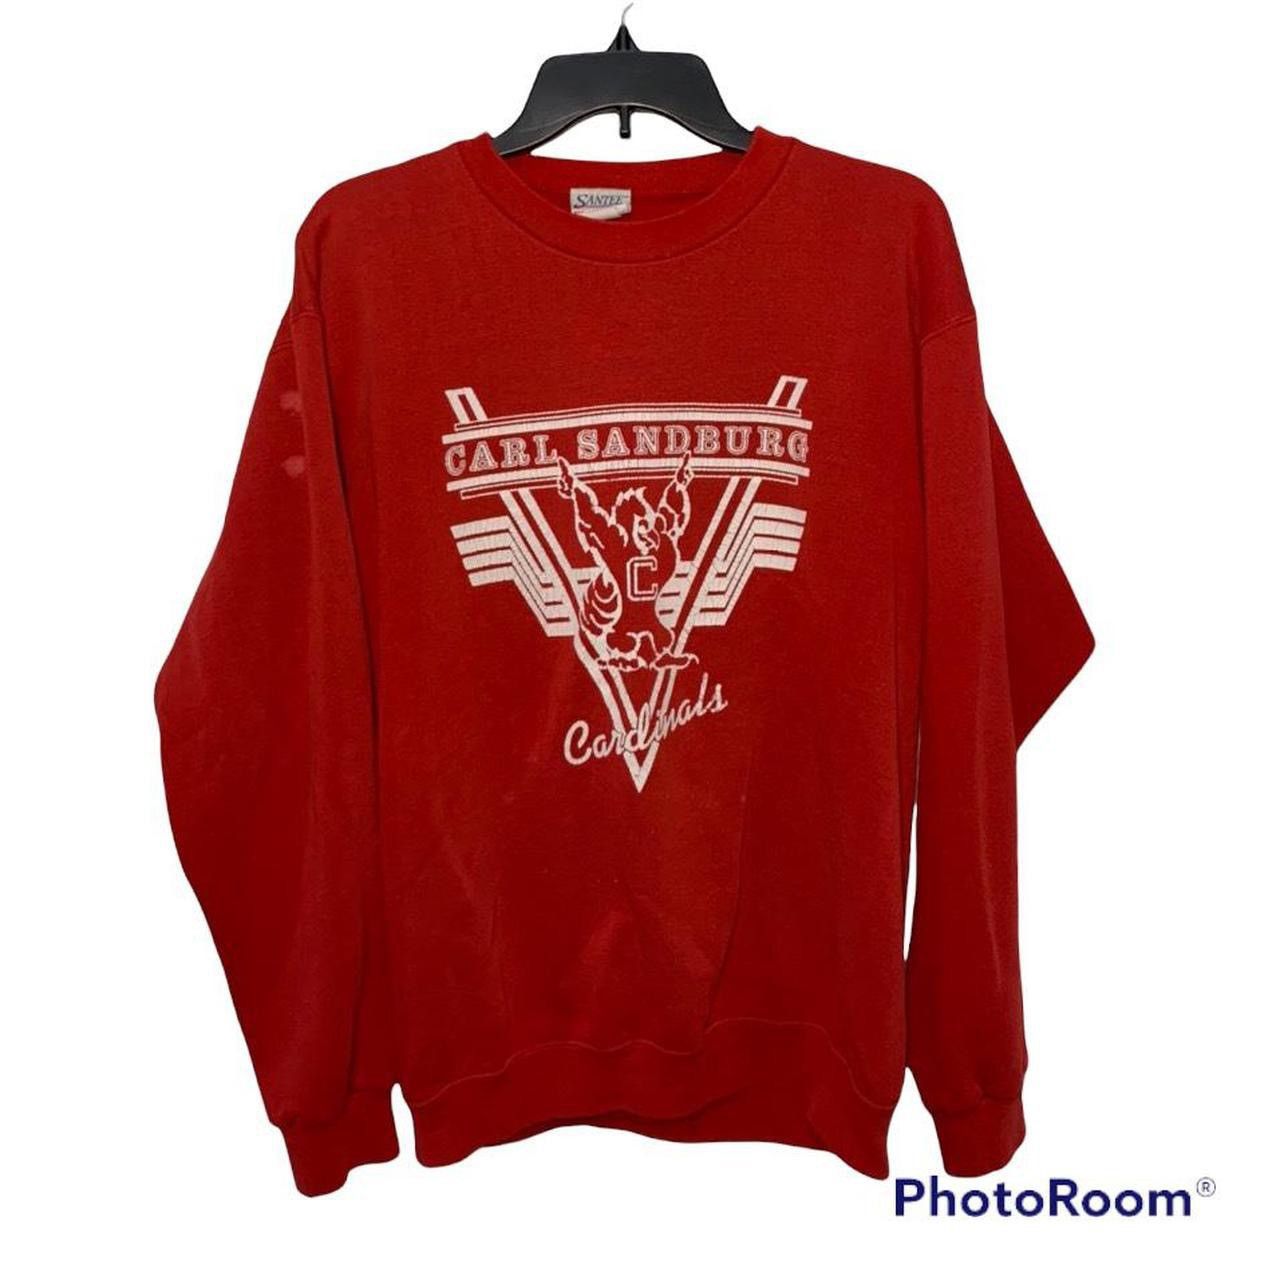 Hottertees 90s Vintage St Louis Cardinals Sweatshirt